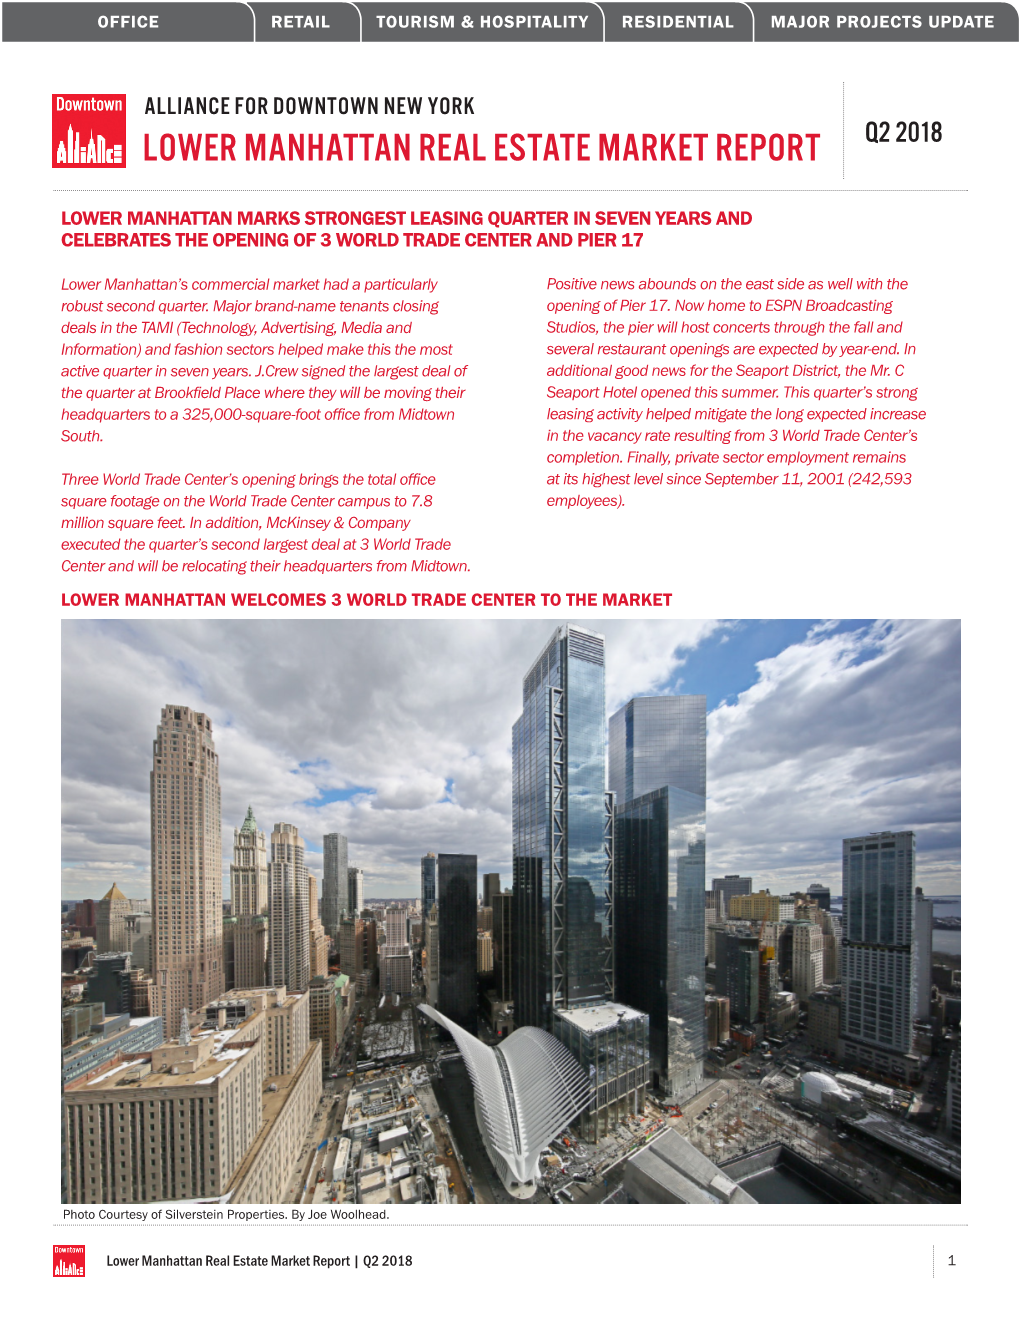 Lower Manhattan Real Estate Market Report Q2 2018